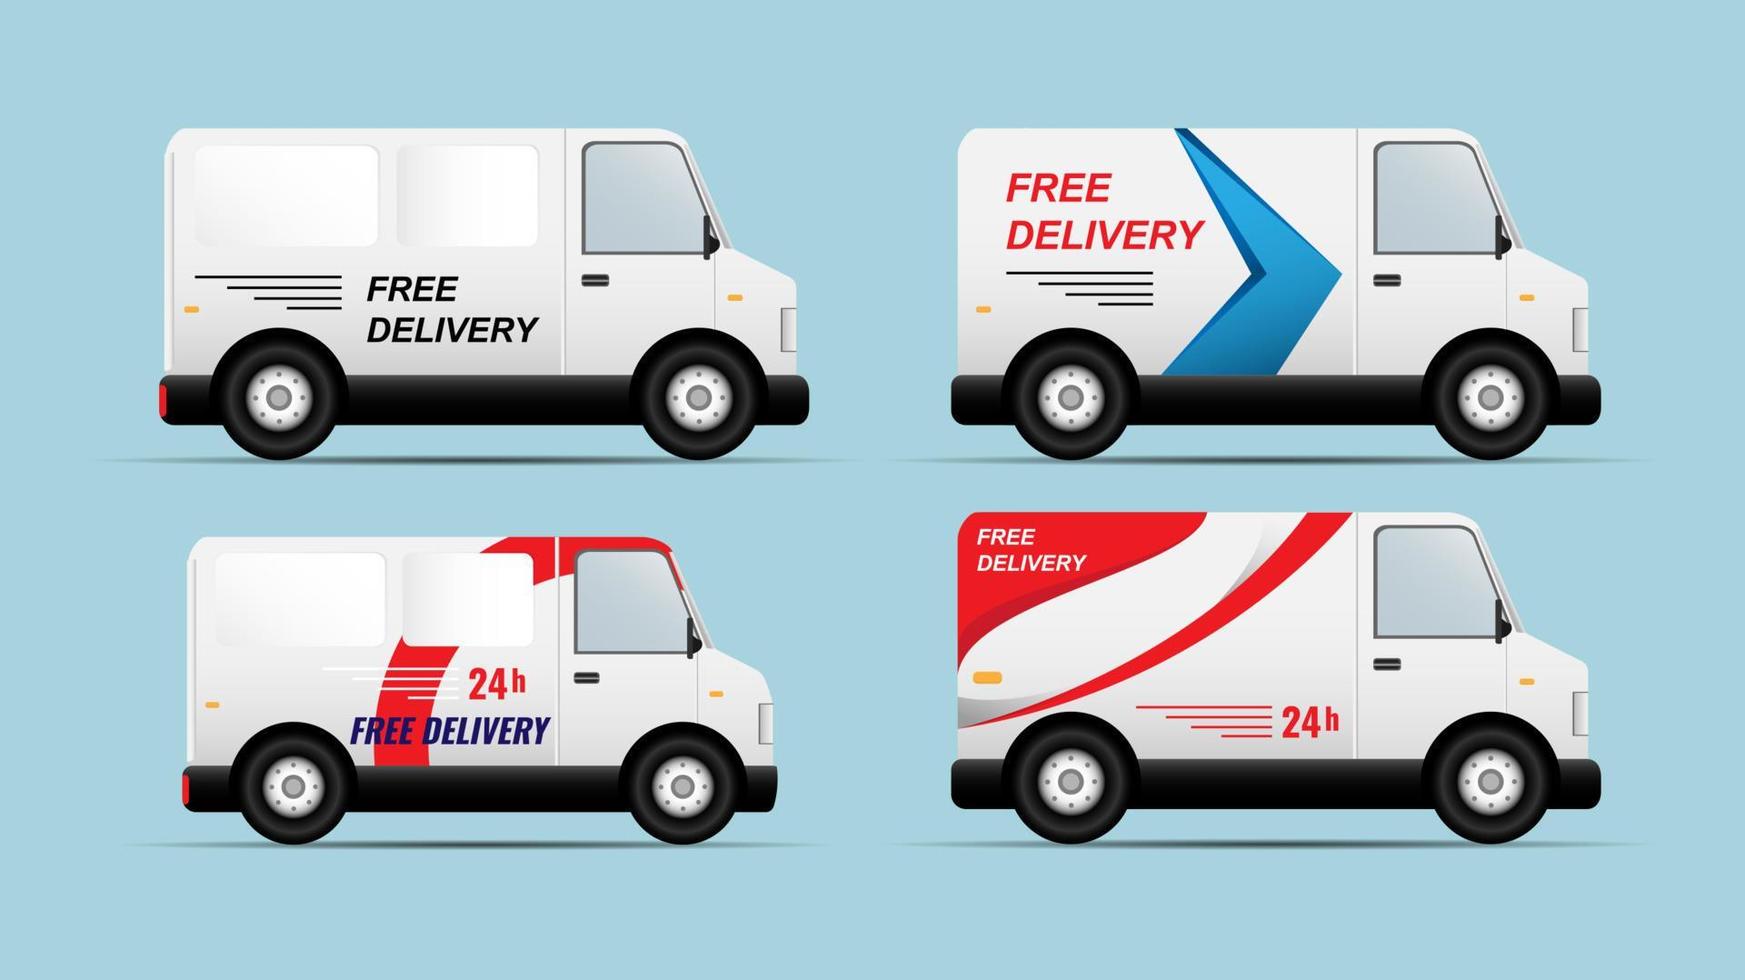 ilustração vetorial de van de entrega. veículo de serviço de entrega rápida e gratuita, carga de carro da cidade, entrega logística 24 horas. vetor